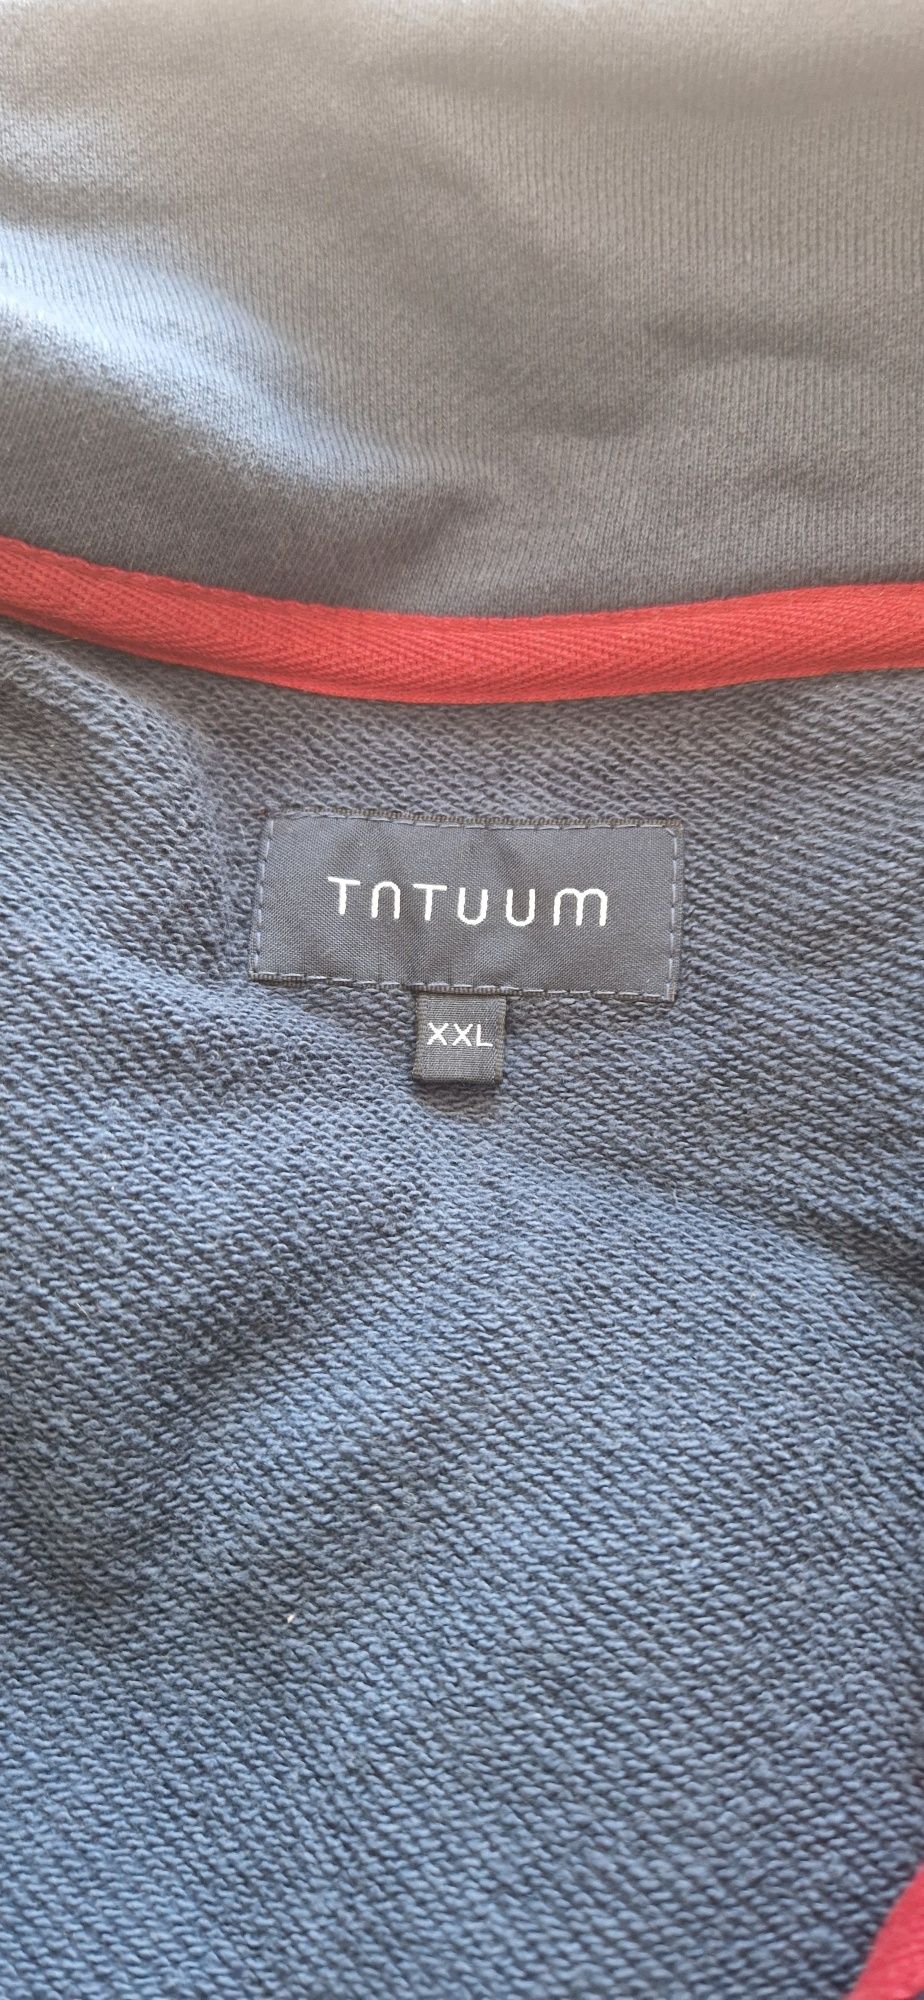 Bluza z kapturem granatowa Tatuum XXL